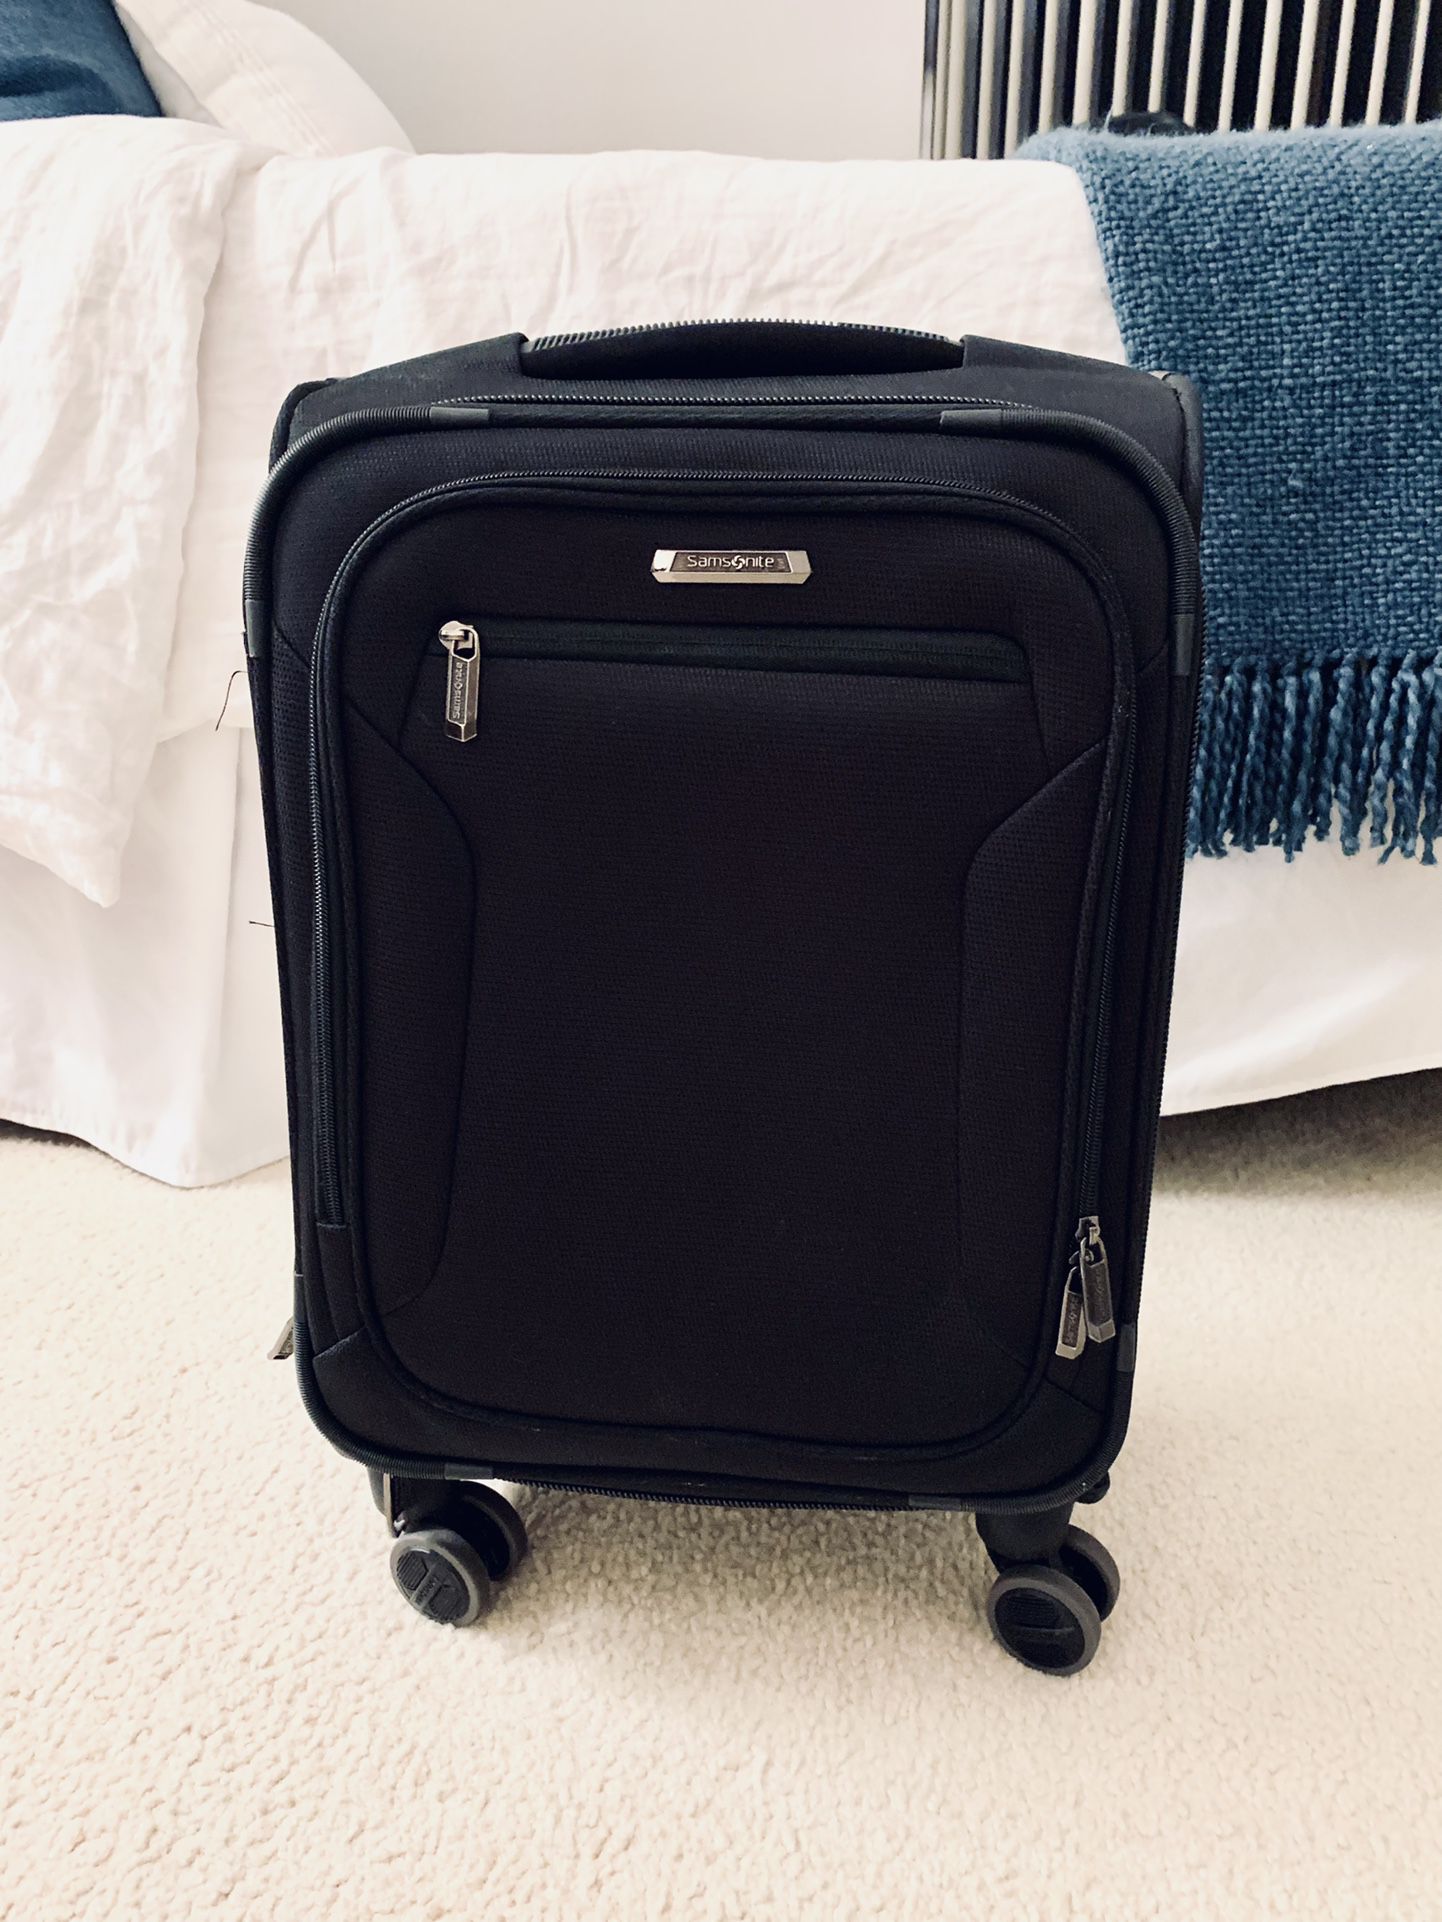 Samsonite Carry On Luggage 🧳 (Like New)